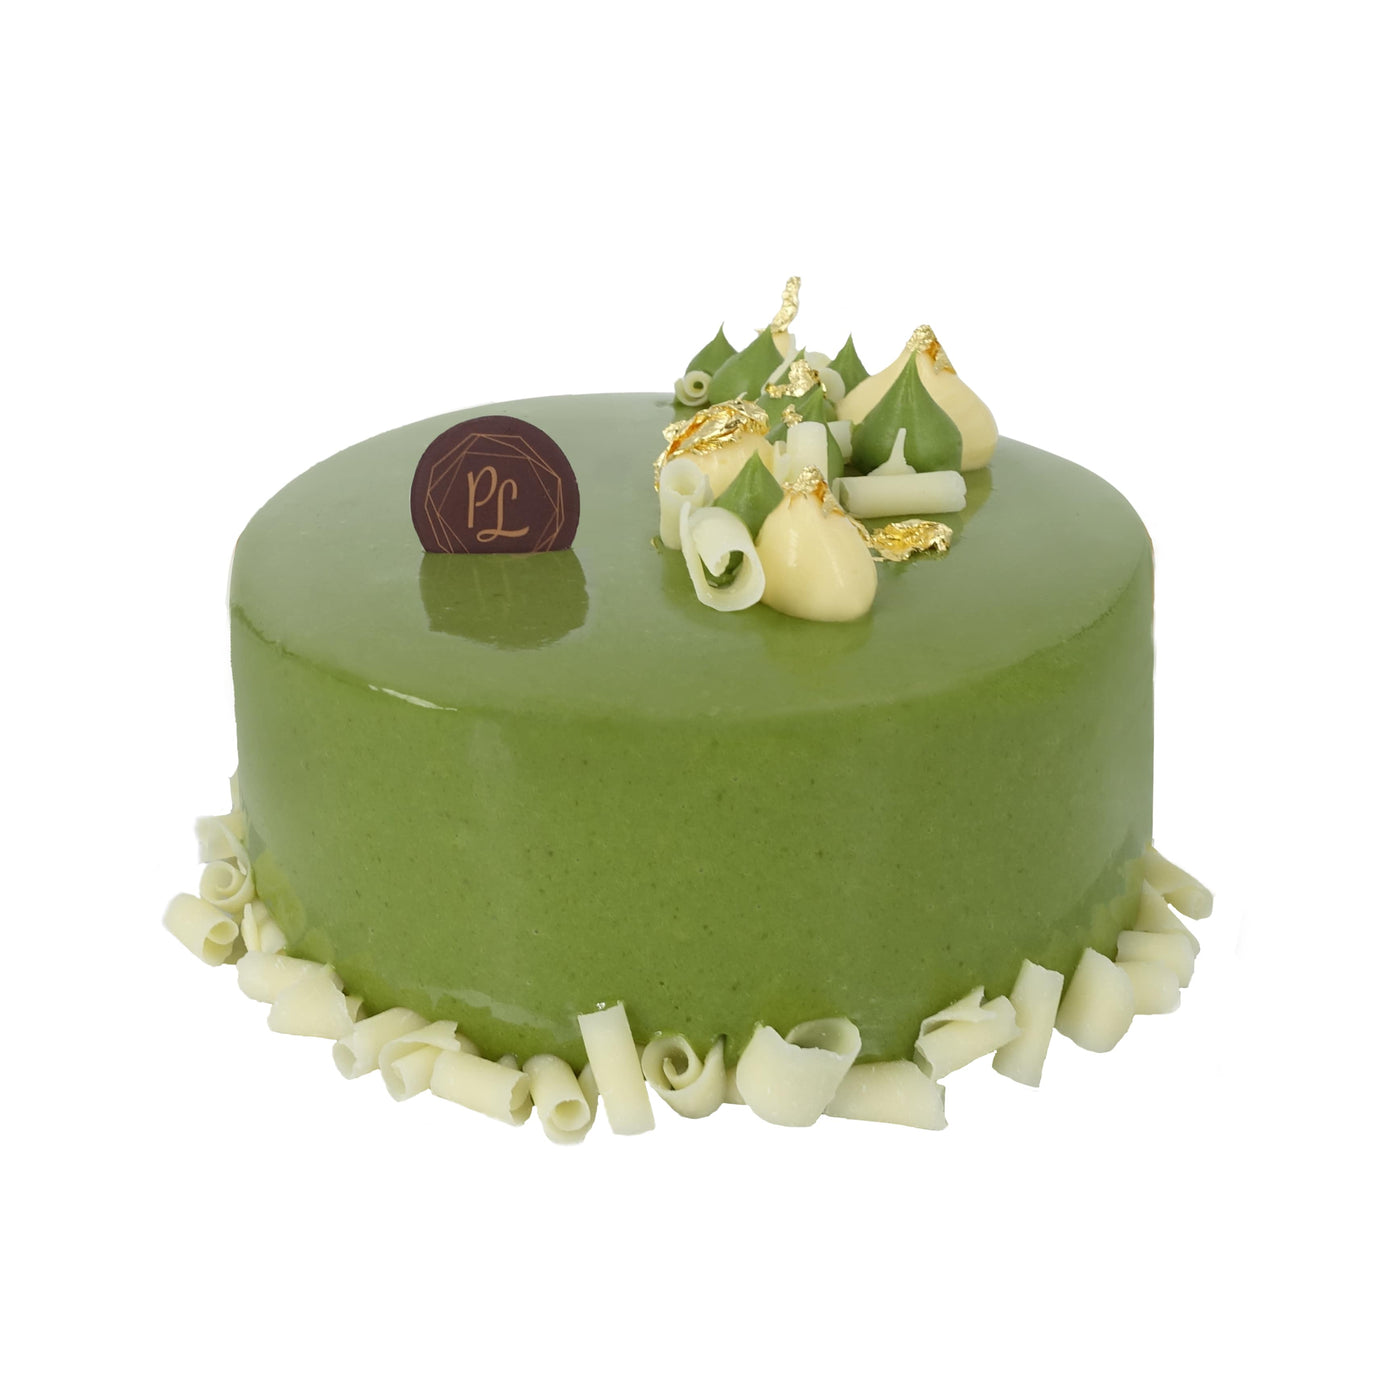 抹茶柚子蛋糕 - 輕量蛋糕 Matcha-Yuzu Cake - Delight Cake